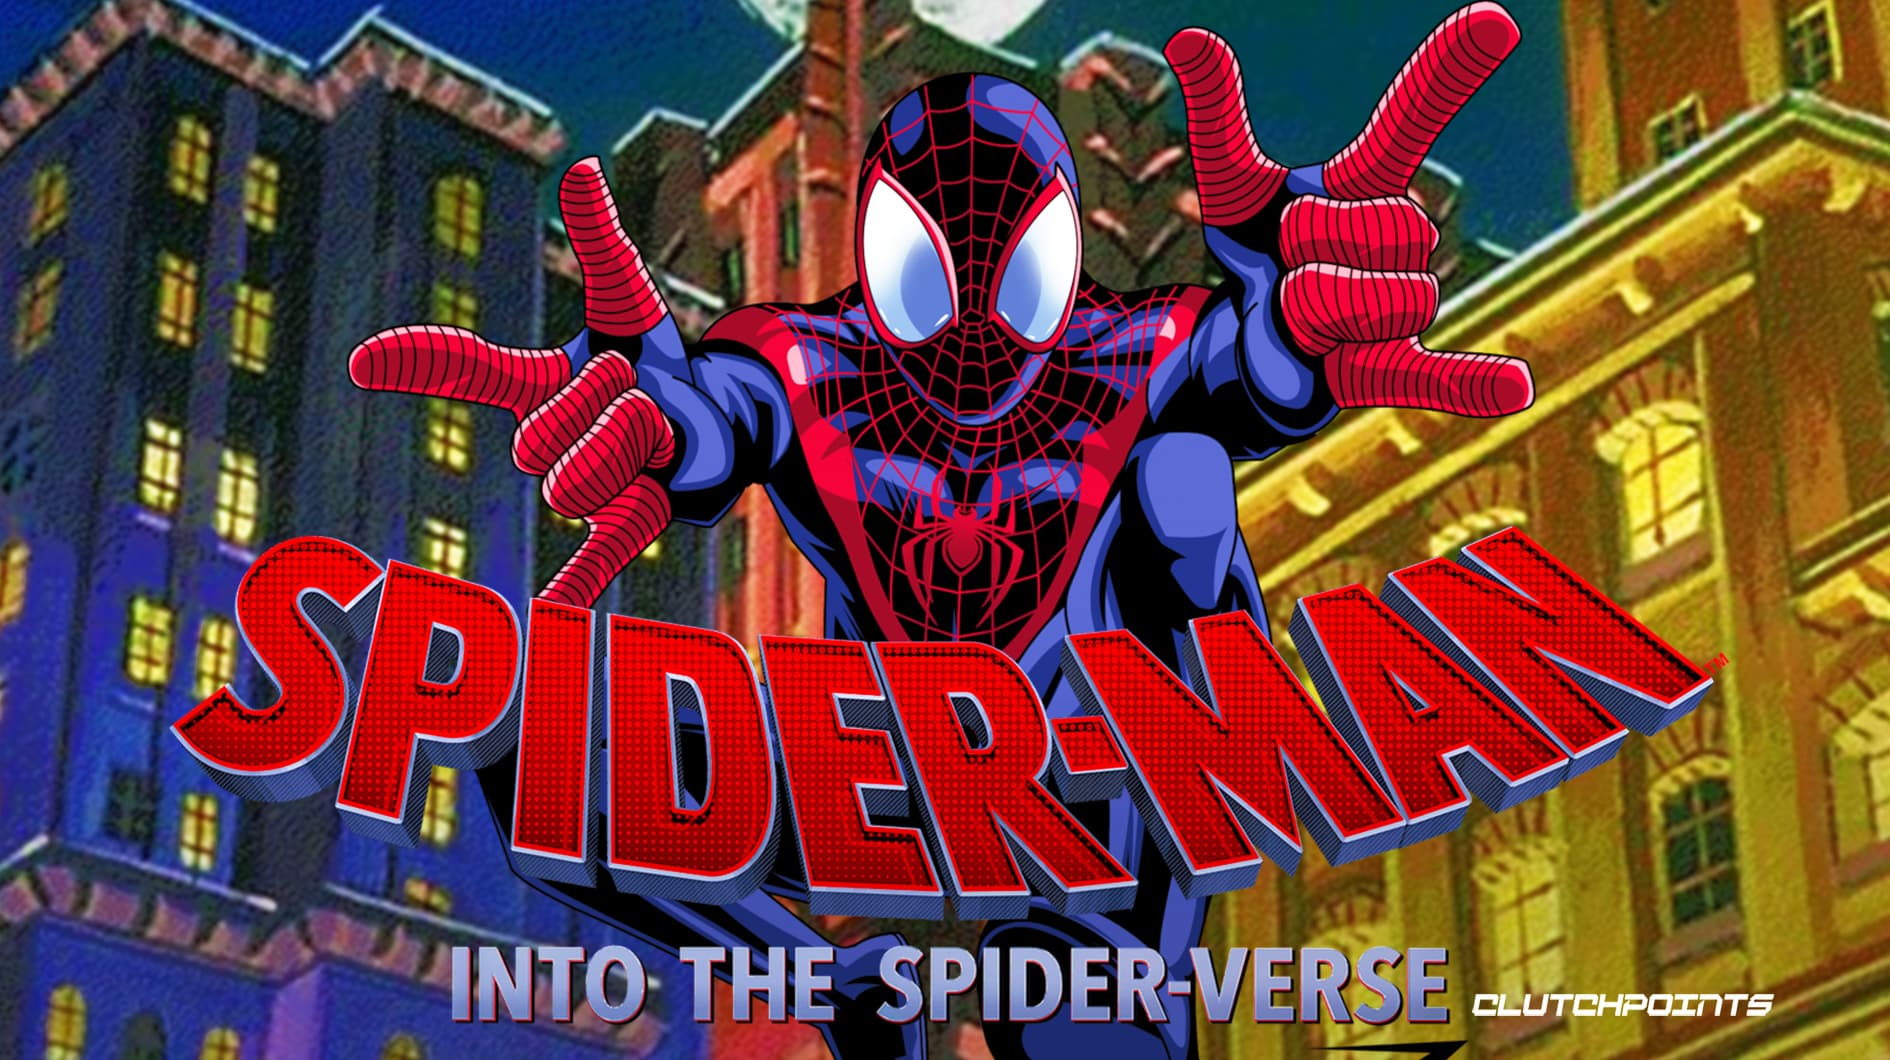 Spider-Man: Across the Spider-Verse (2023) - IMDb